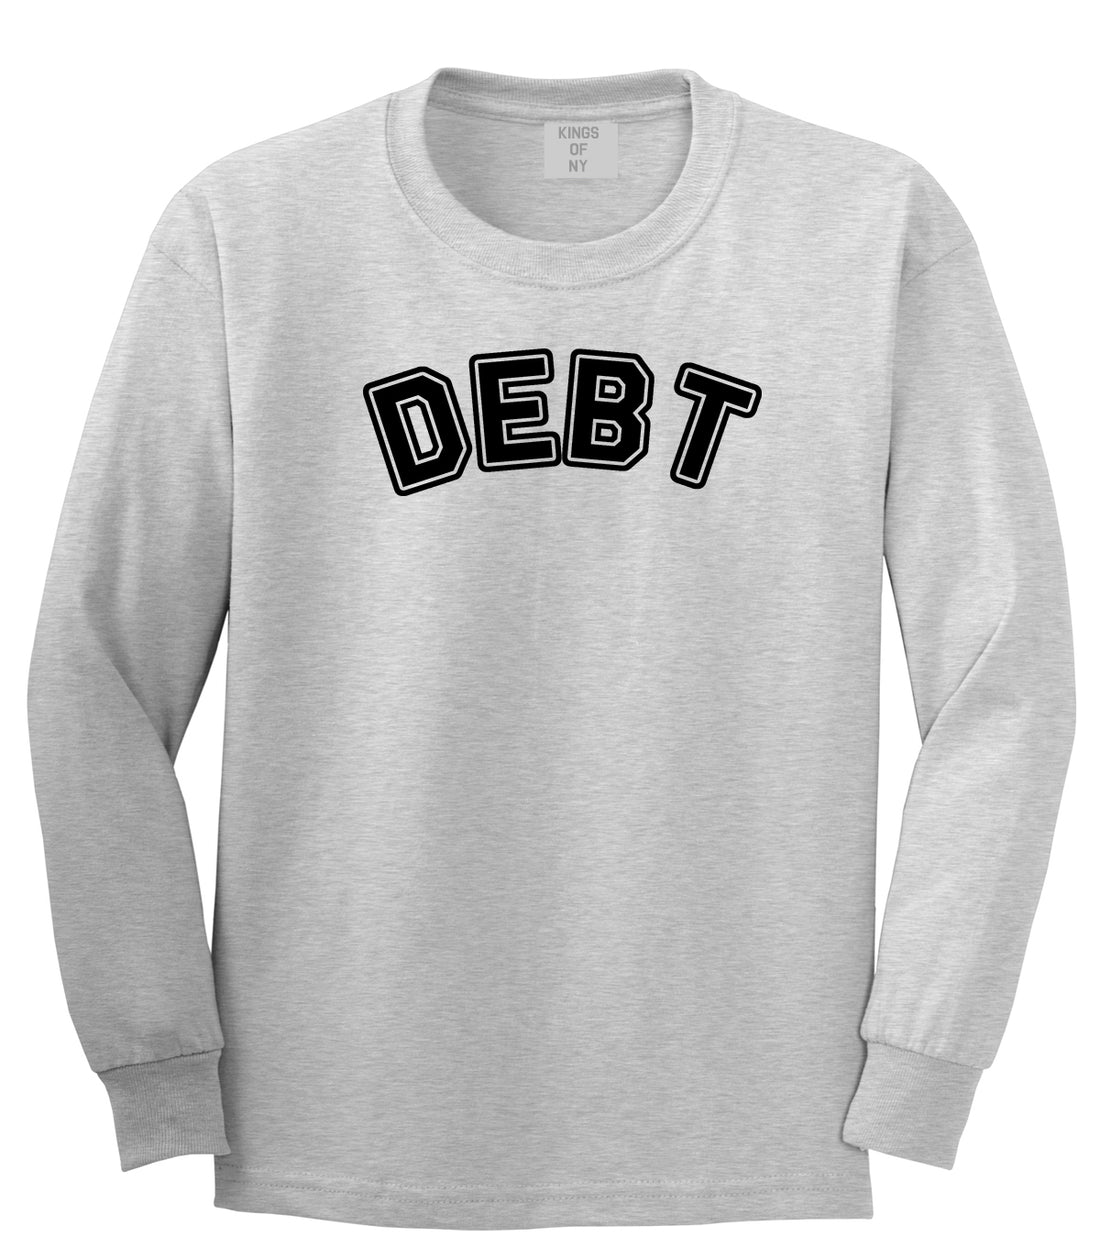 Debt Life Long Sleeve T-Shirt in Grey